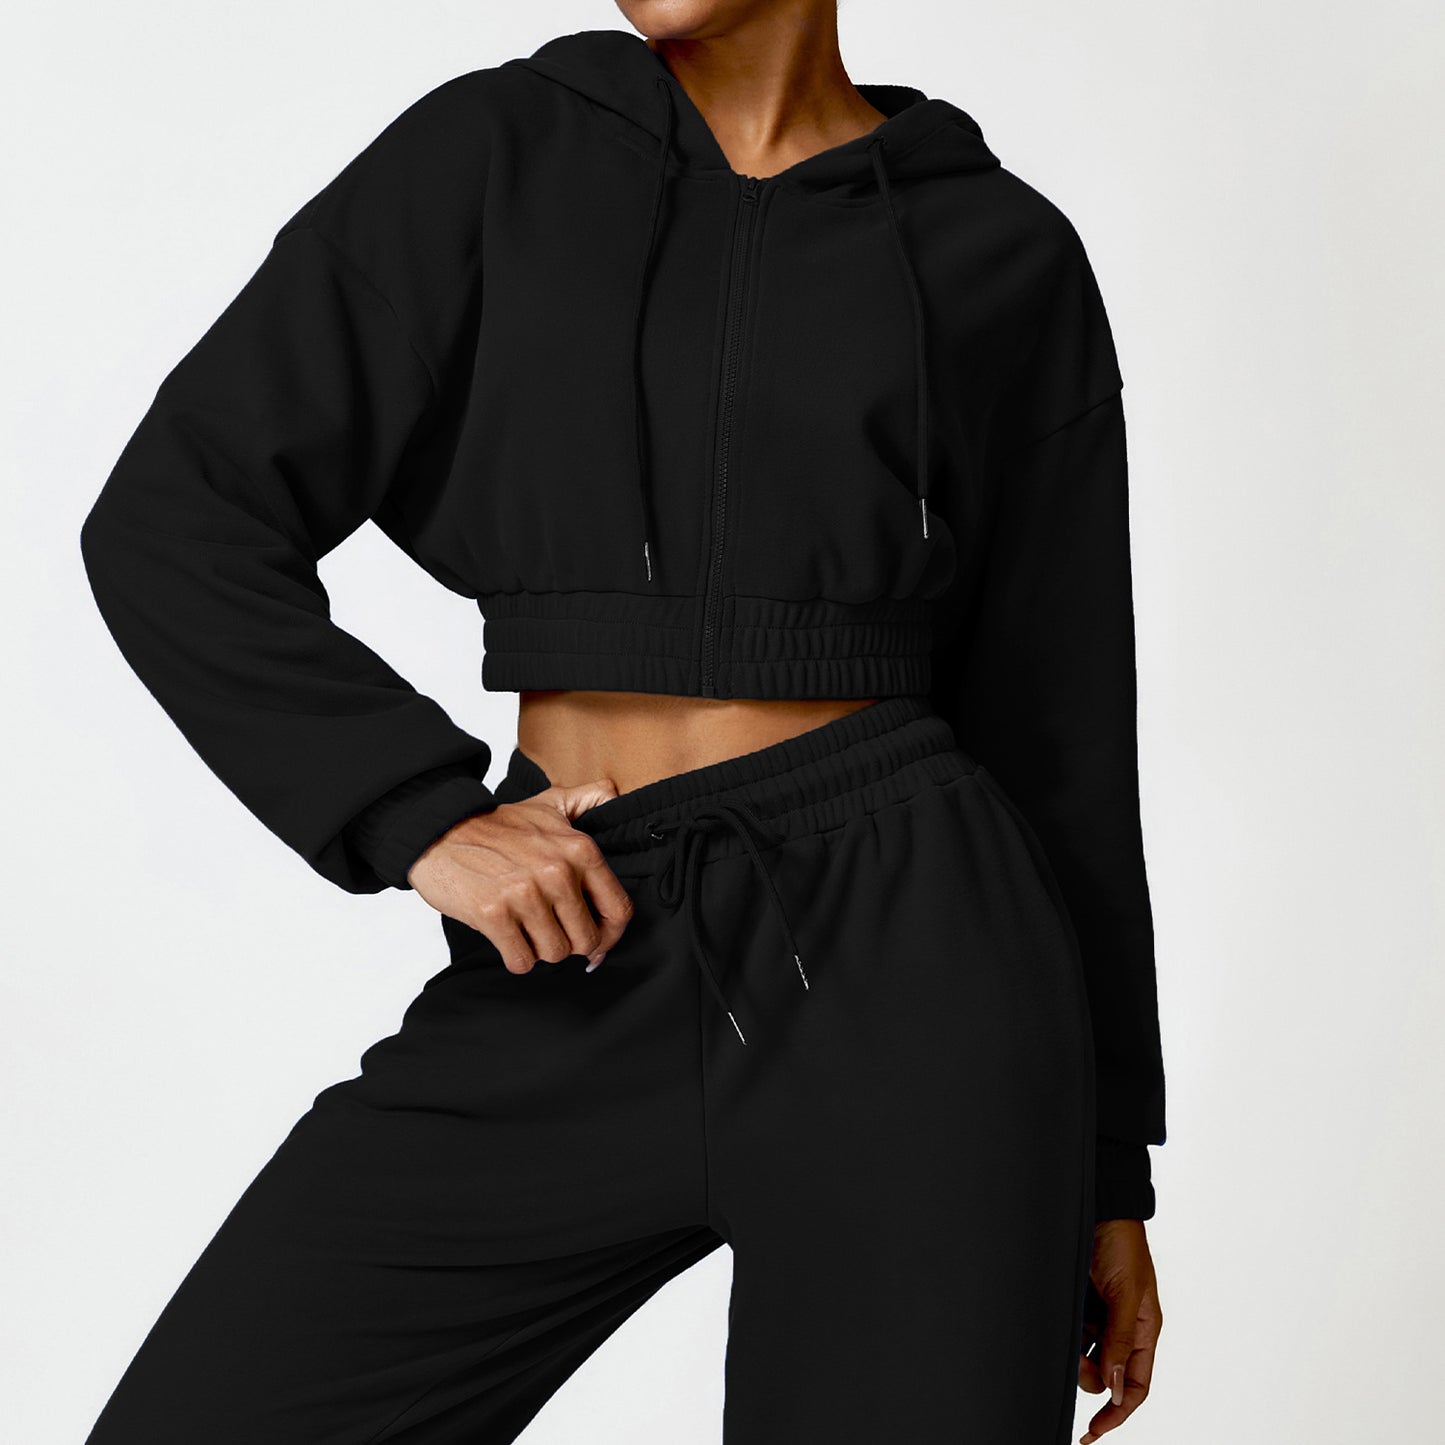 
                  
                    Outerwear Warm Casual Loose Long Sleeve Sweatershirt Coat Zipper Hooded Fitness Sports Sweater for Women
                  
                